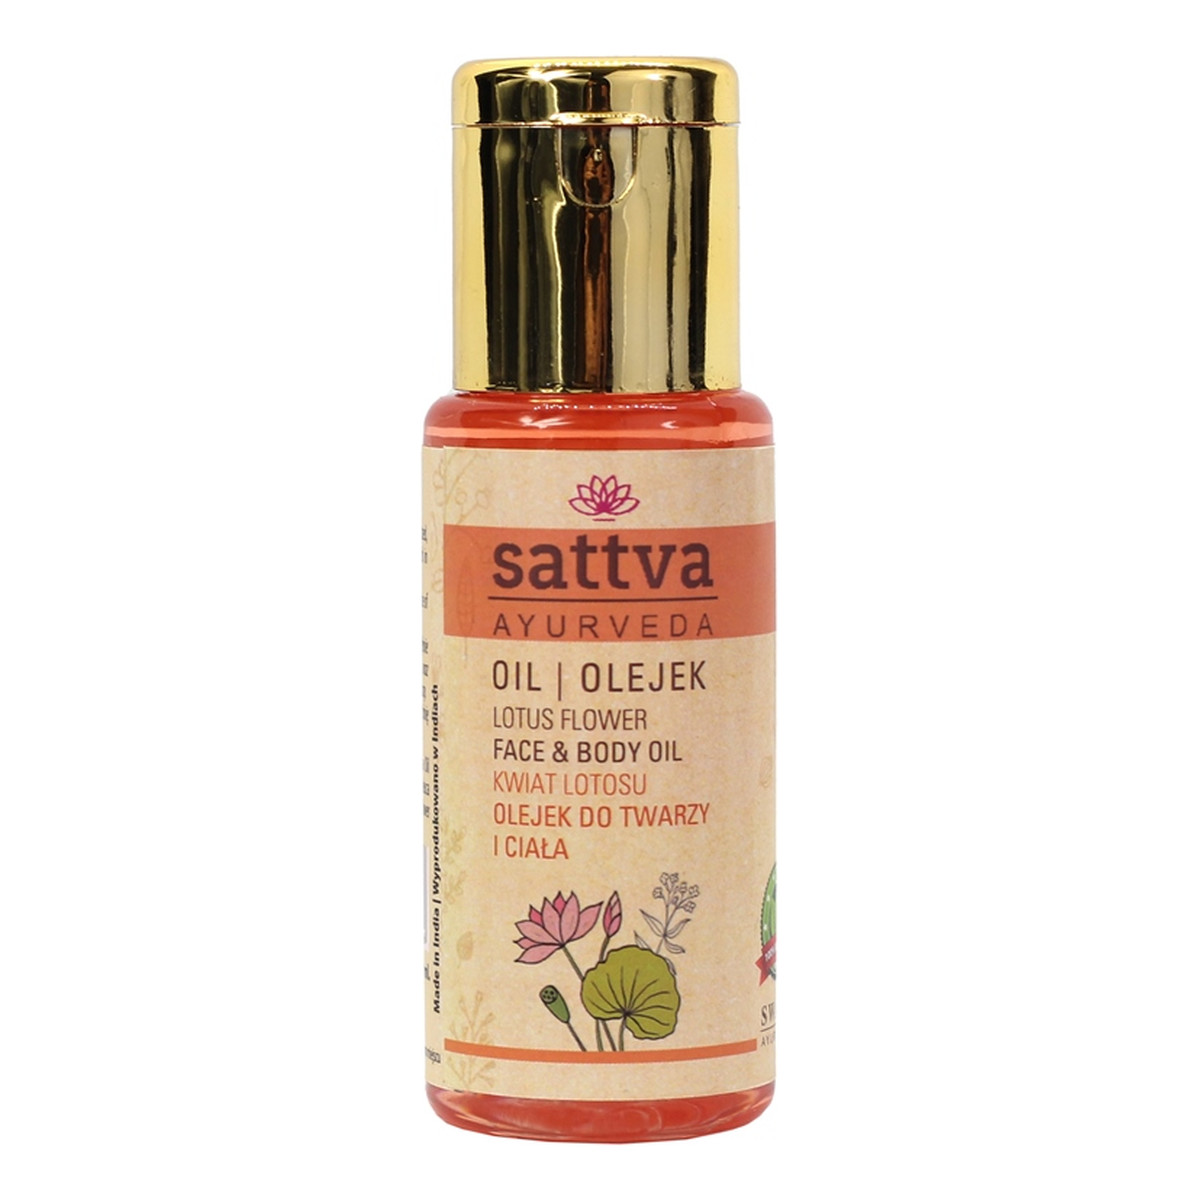 Sattva Face & Body Oil Olejek do twarzy i ciała lotus flower 50ml